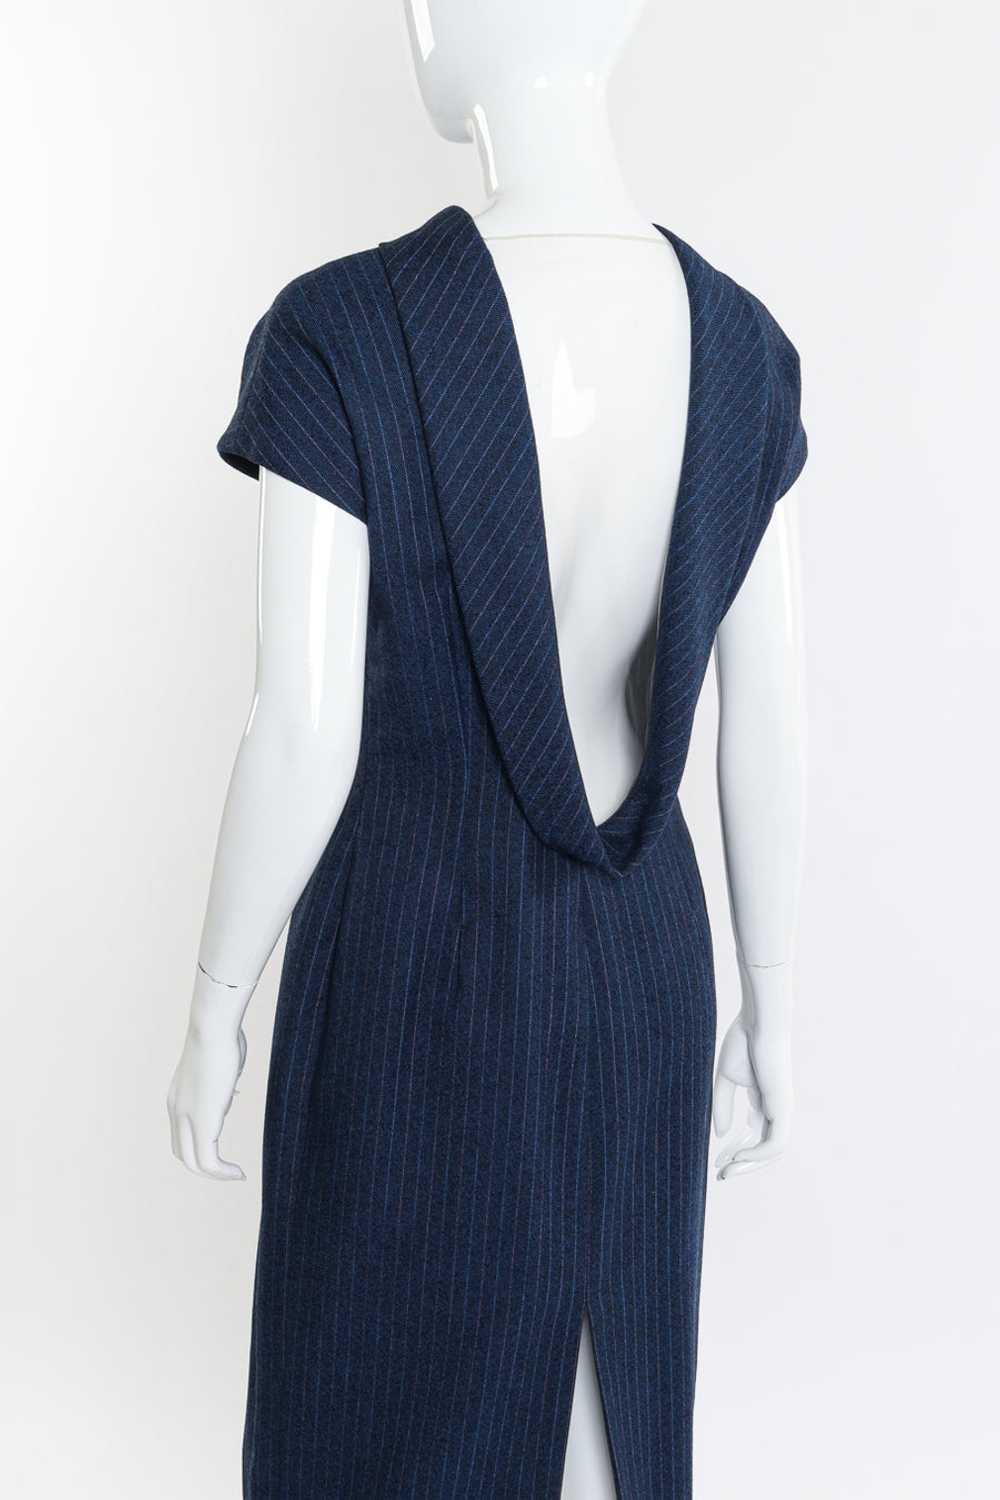 GIVENCHY 1998 F/W Wool Pinstripe Dress - image 3